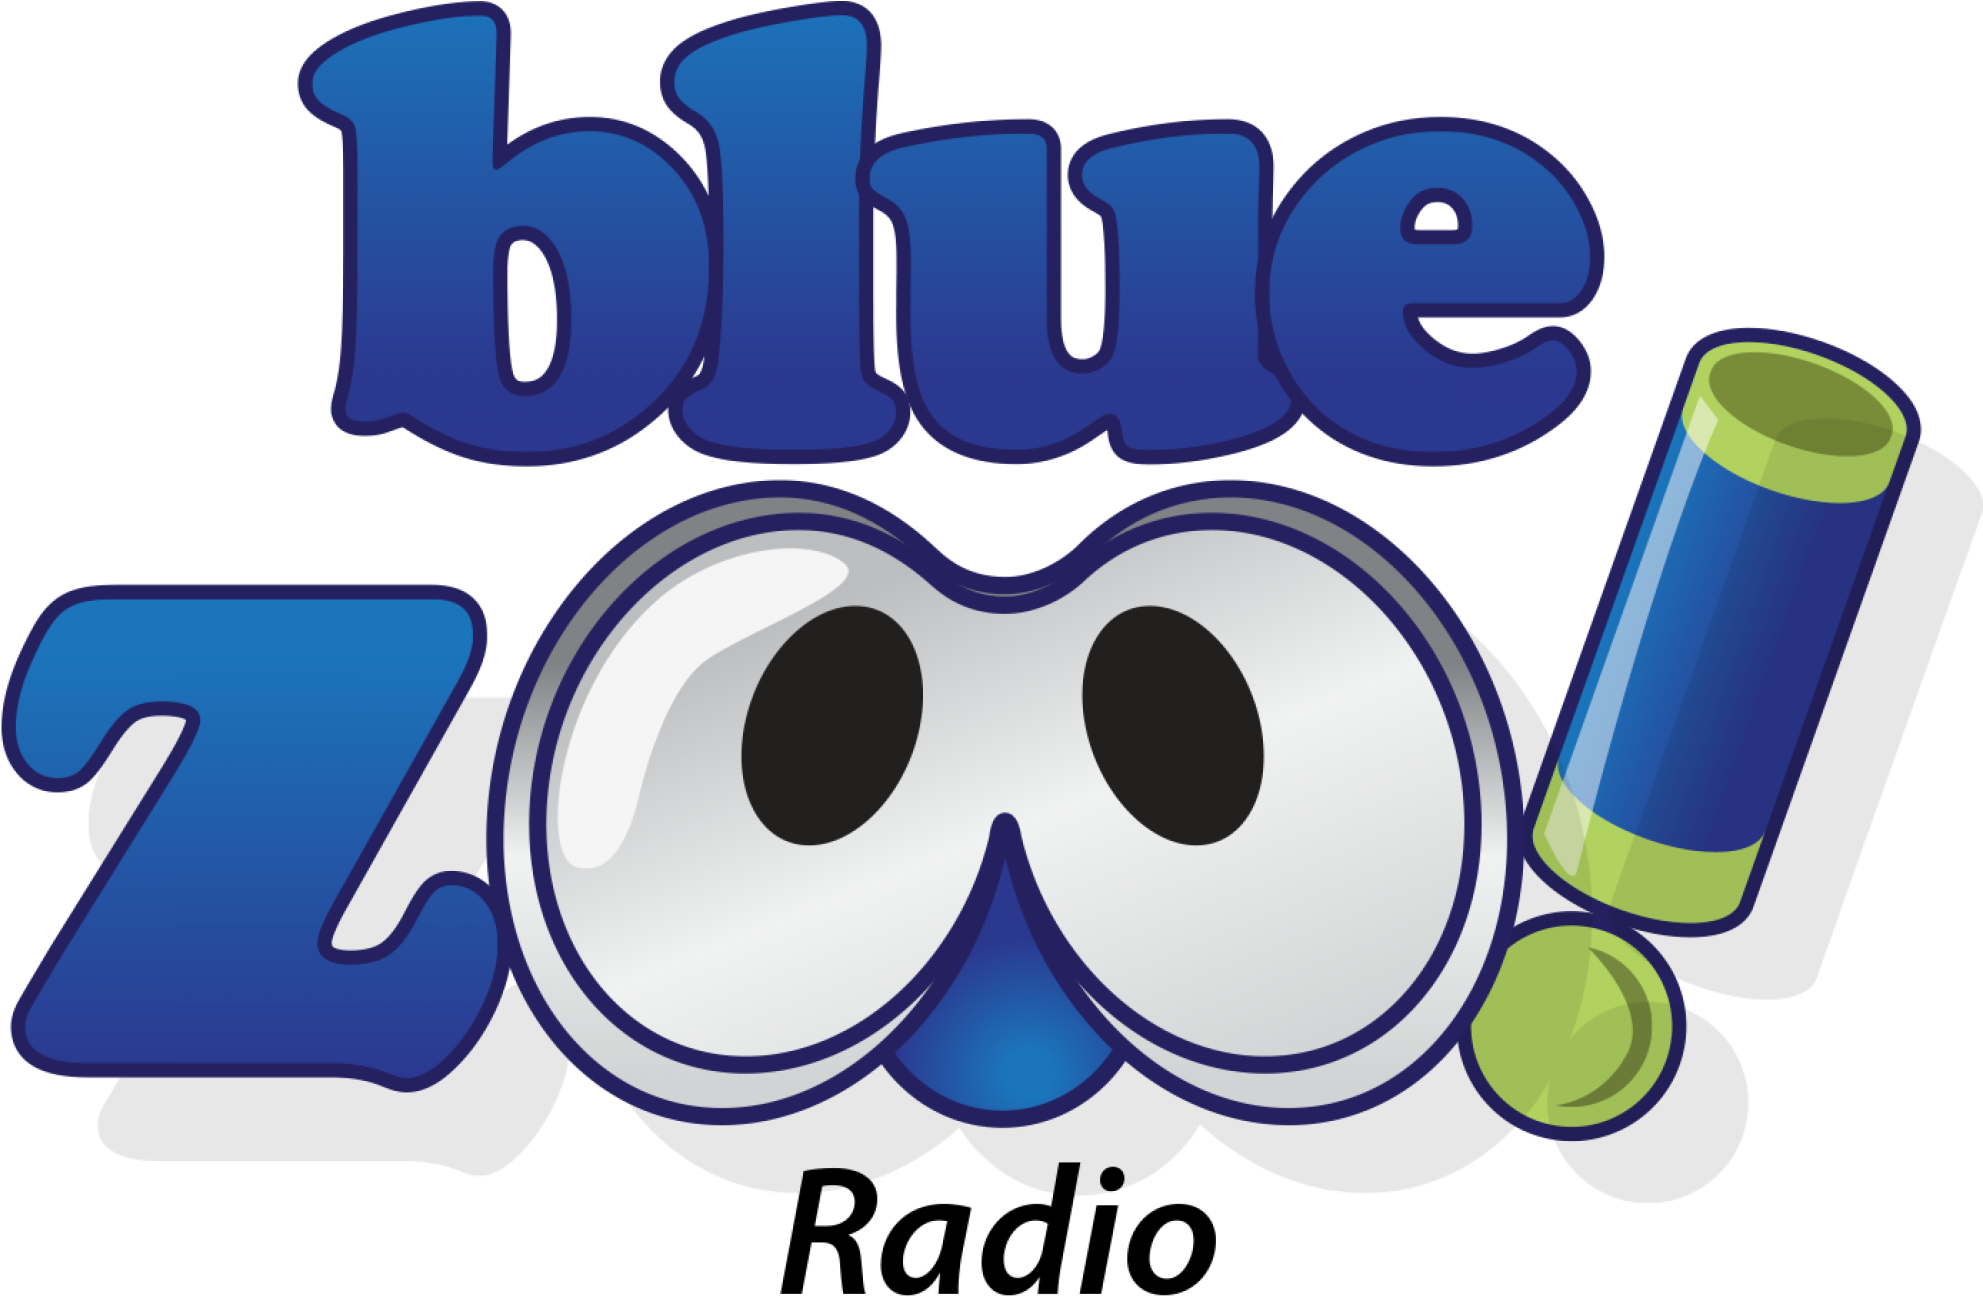 Blue Zoo (2000x2000)